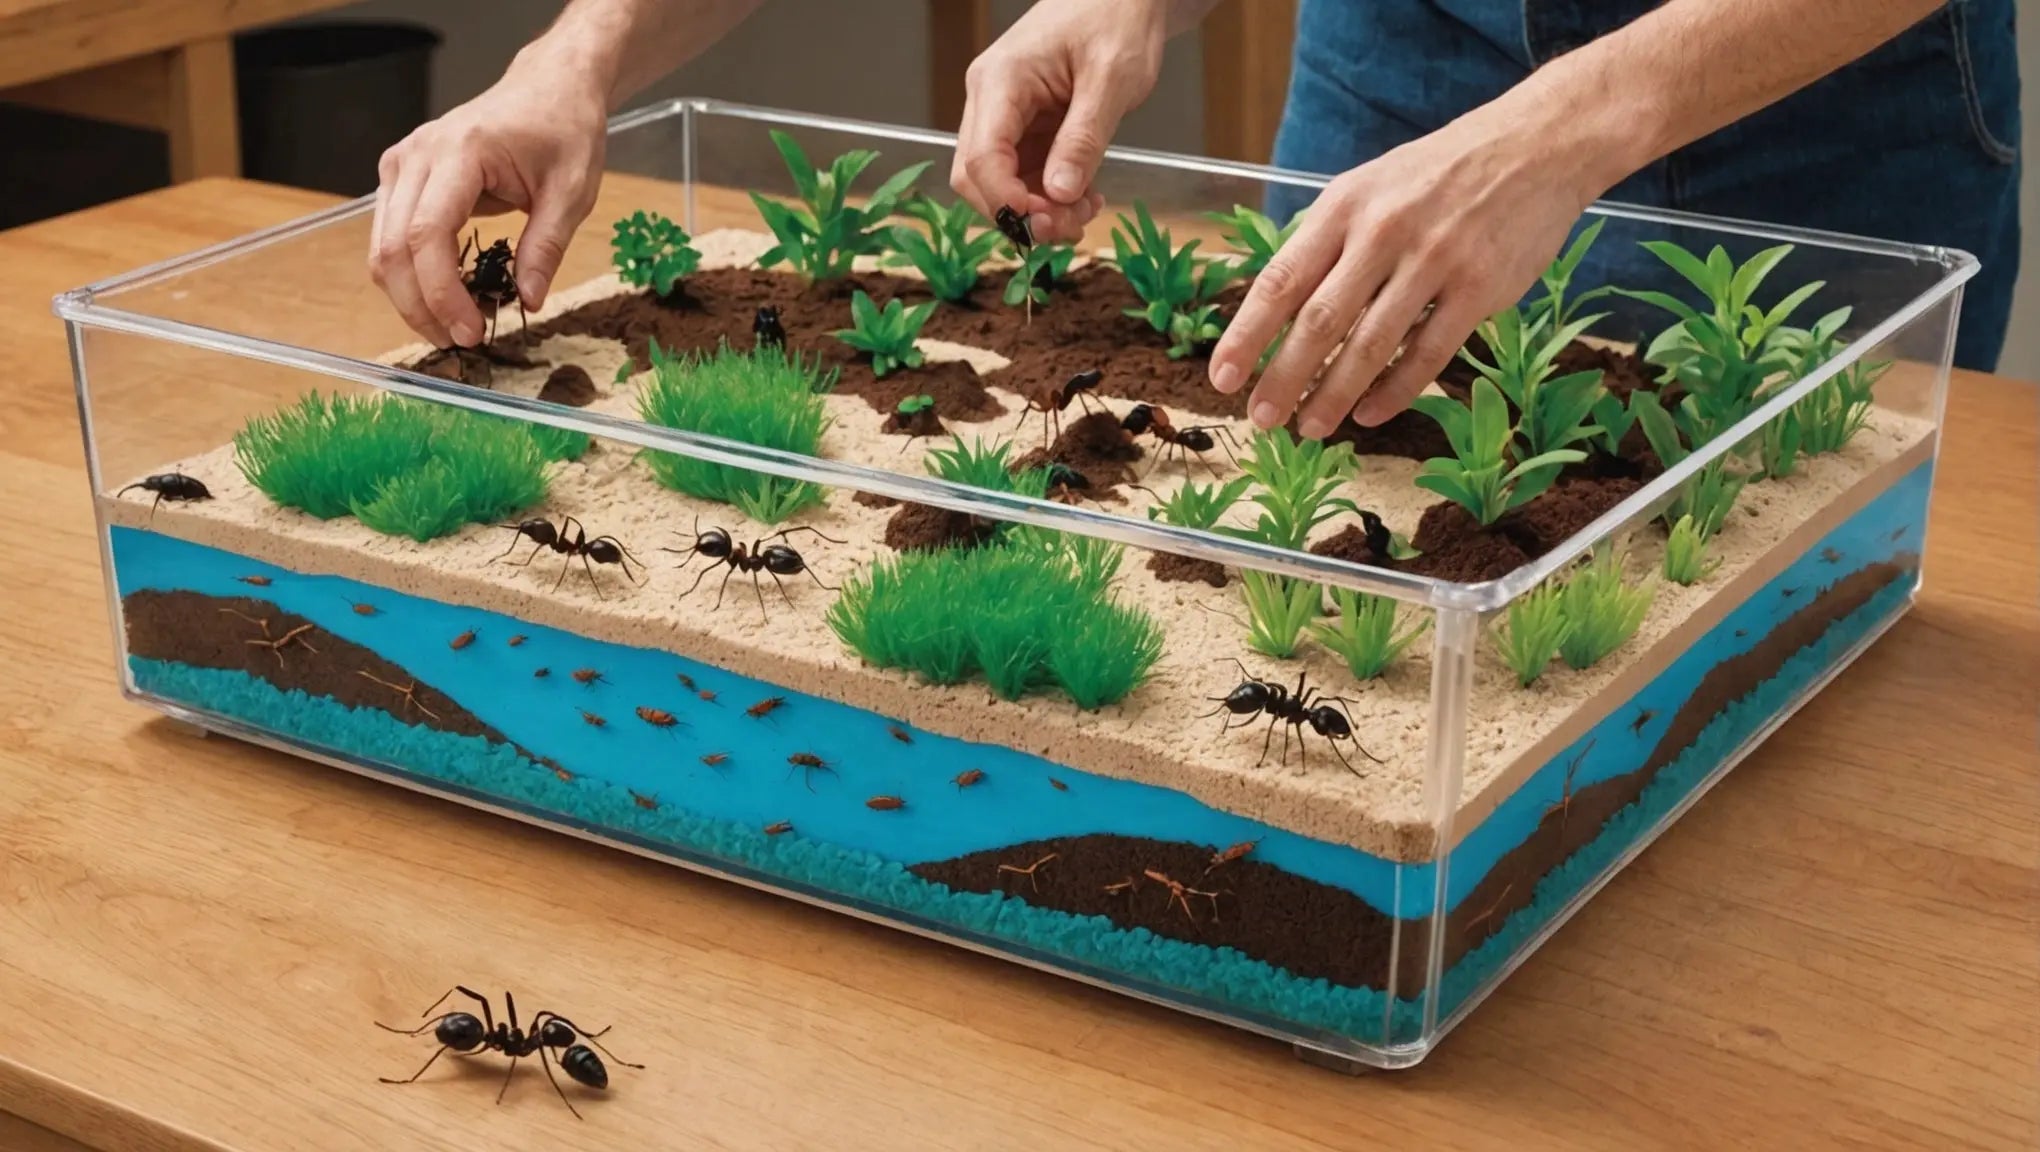 Giant Ant Farm Kit: Create Your Own Ant Habitat